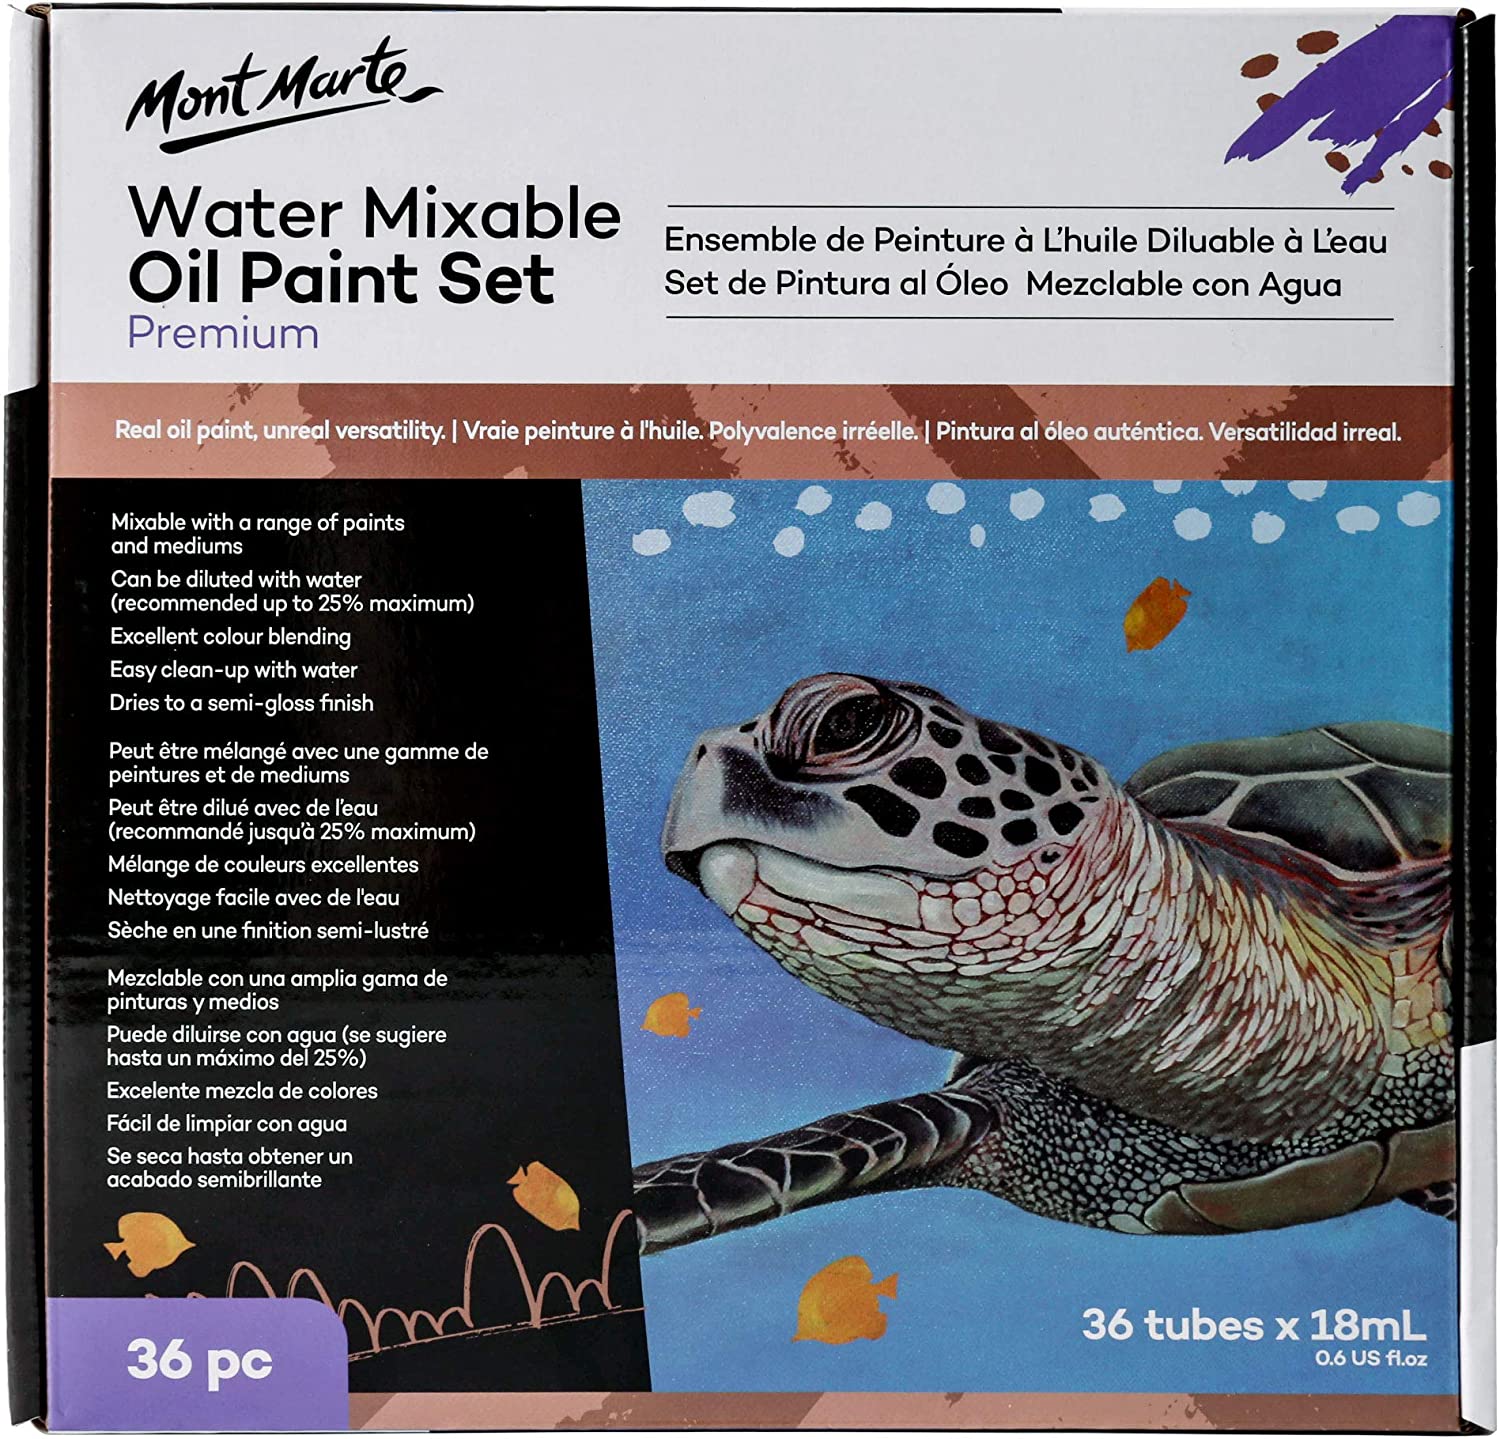 Mont Marte Premium H2O Water Mixable Oil Paint Set back